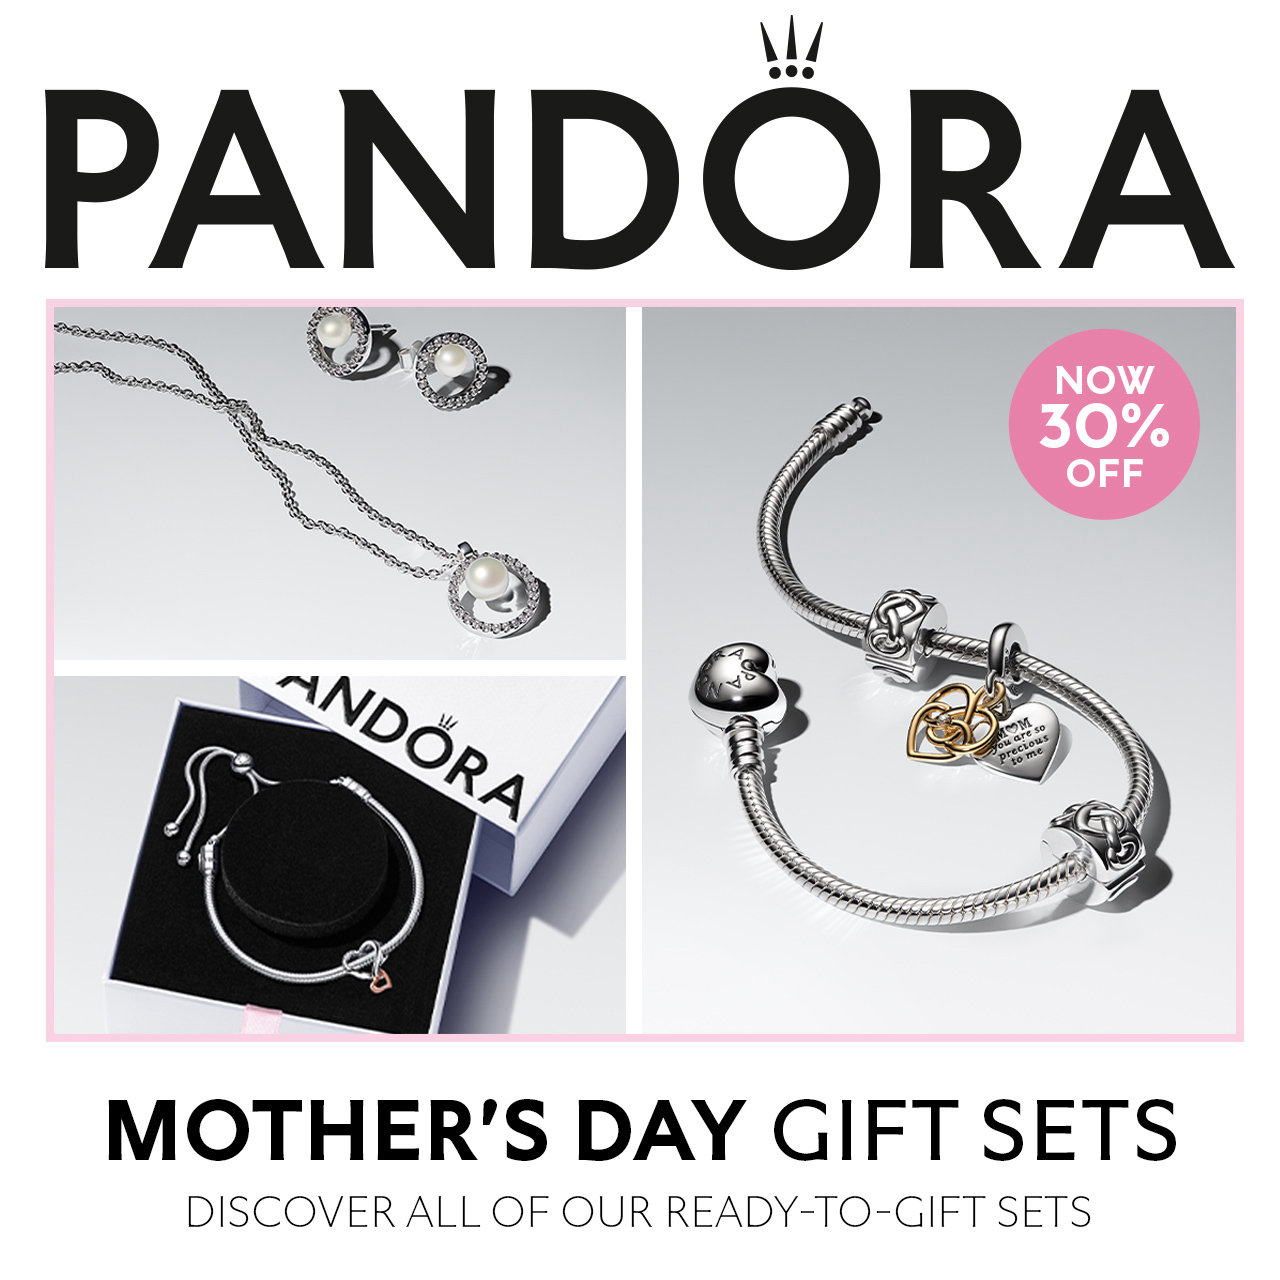 Pandora Campaign 139 Receive 30 off select Gift Sets at Pandora EN 1280x1280 1